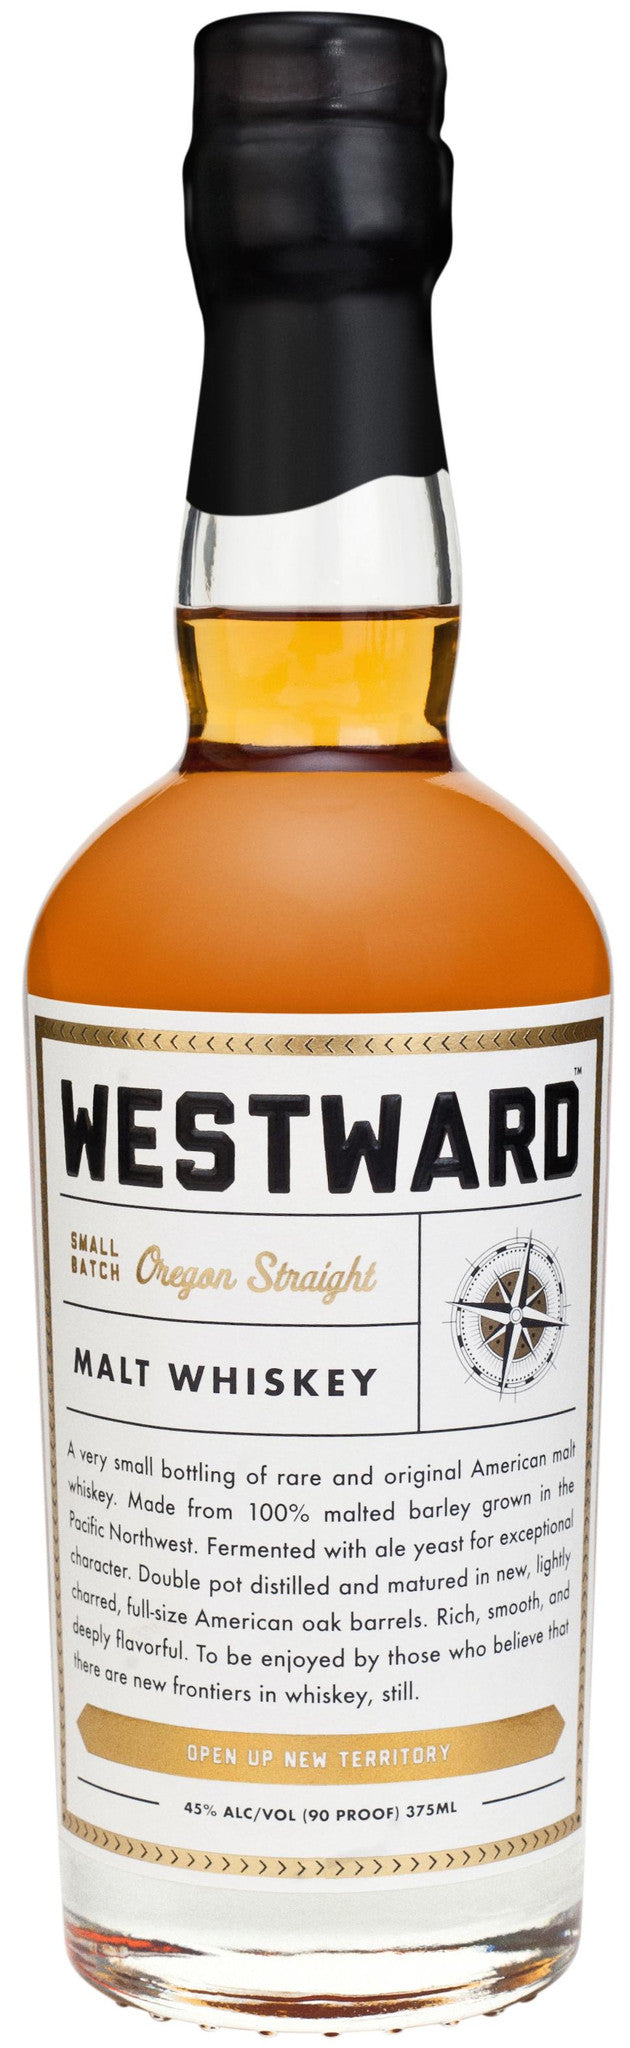 Westward Single Barrel Malt Whiskey